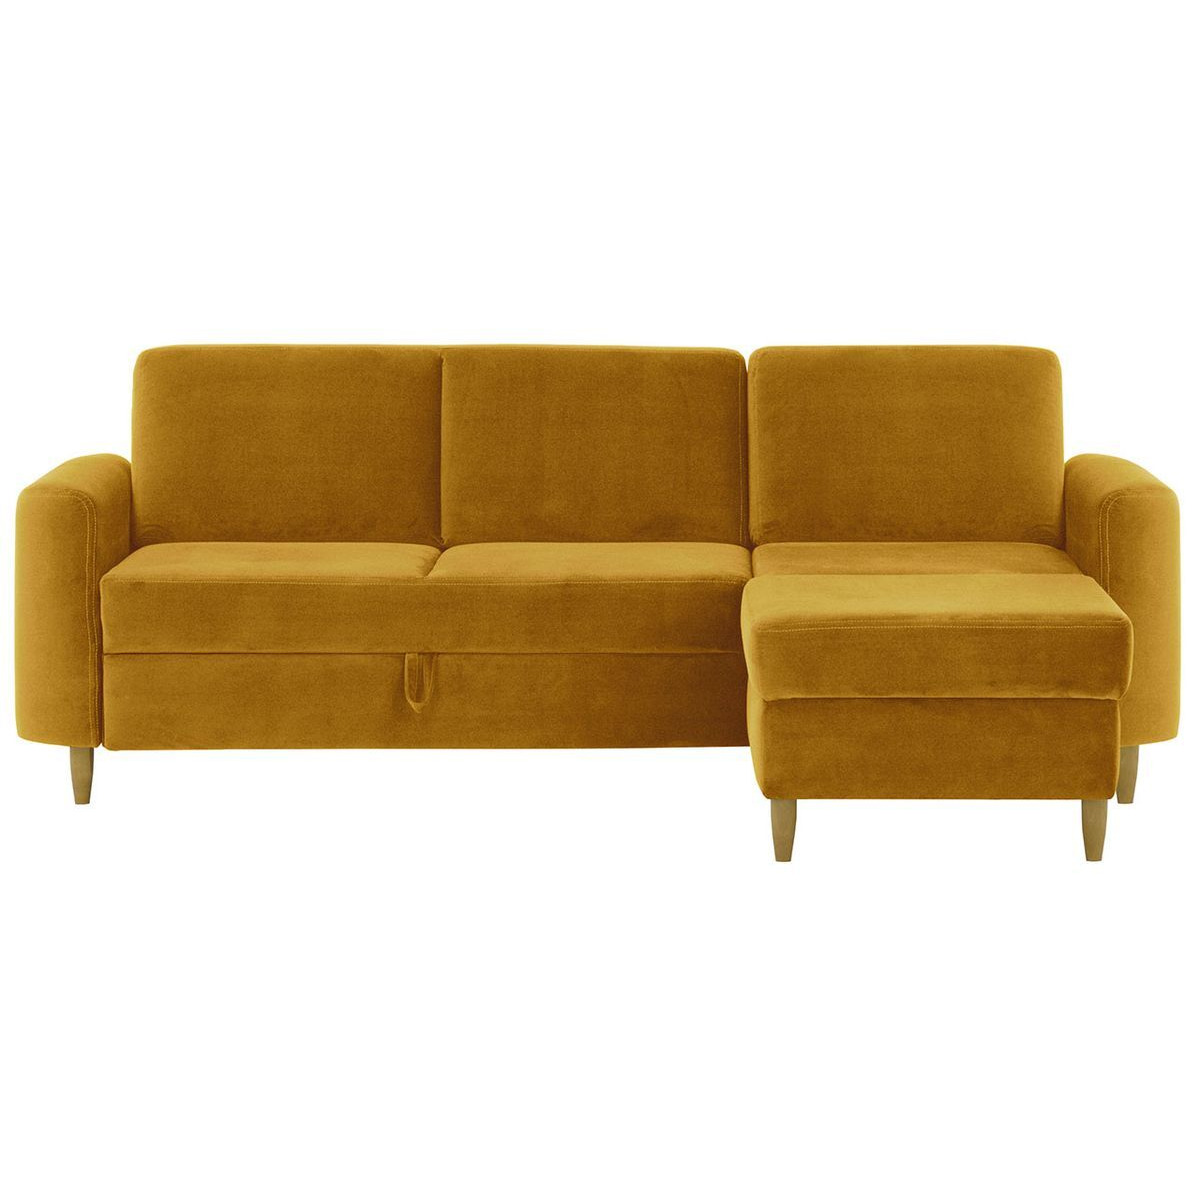 Elegance Corner Sofa Bed With Storage, mustard - image 1